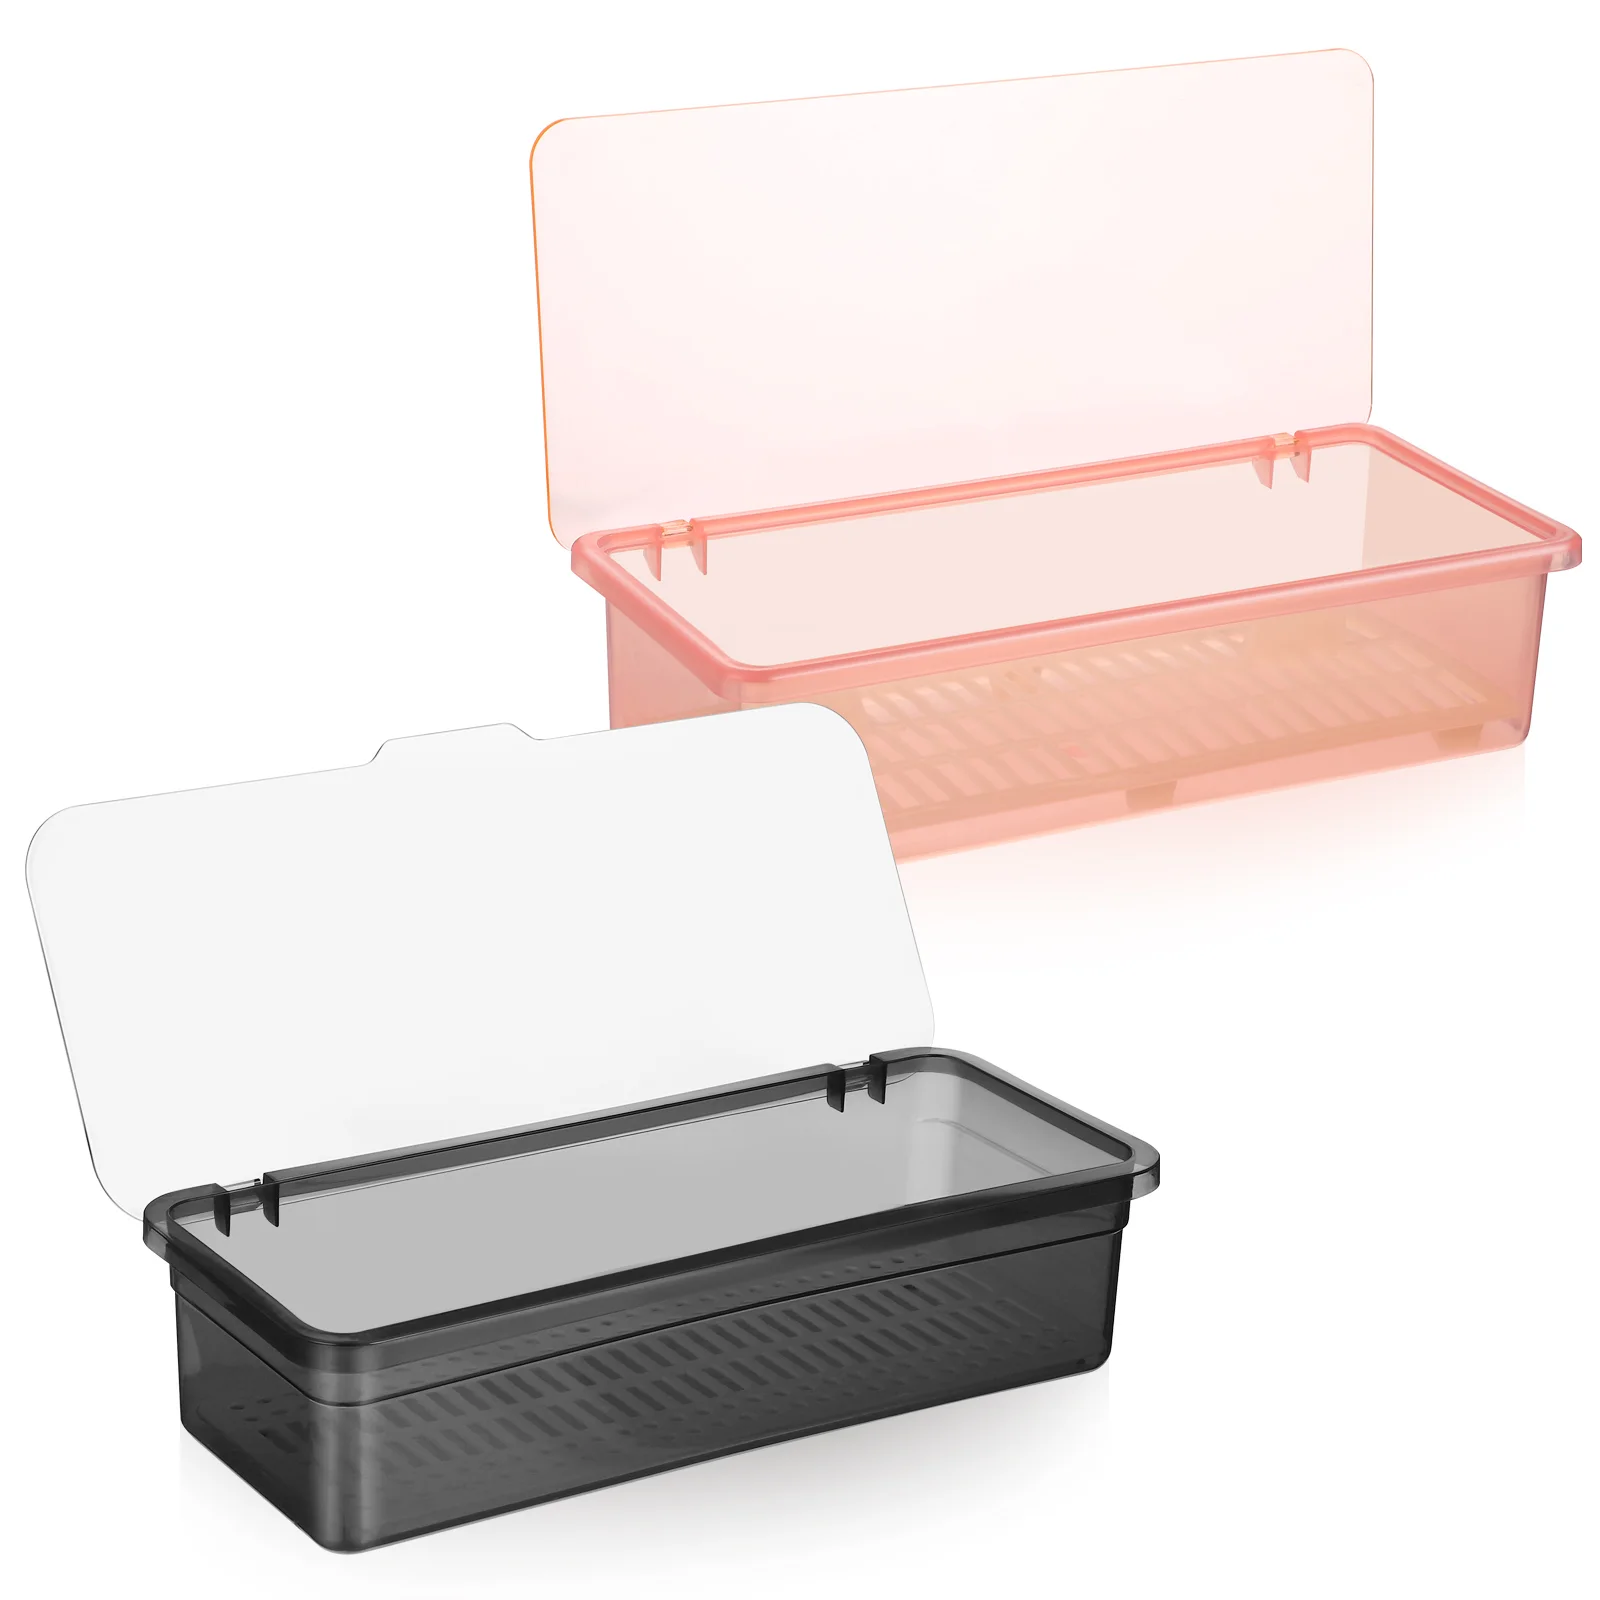 

2 Pcs Drain Box Silverware Tray Lid Organizer Countertop Utensil Plastic Compartment Storage Containers Racks Travel Drawers